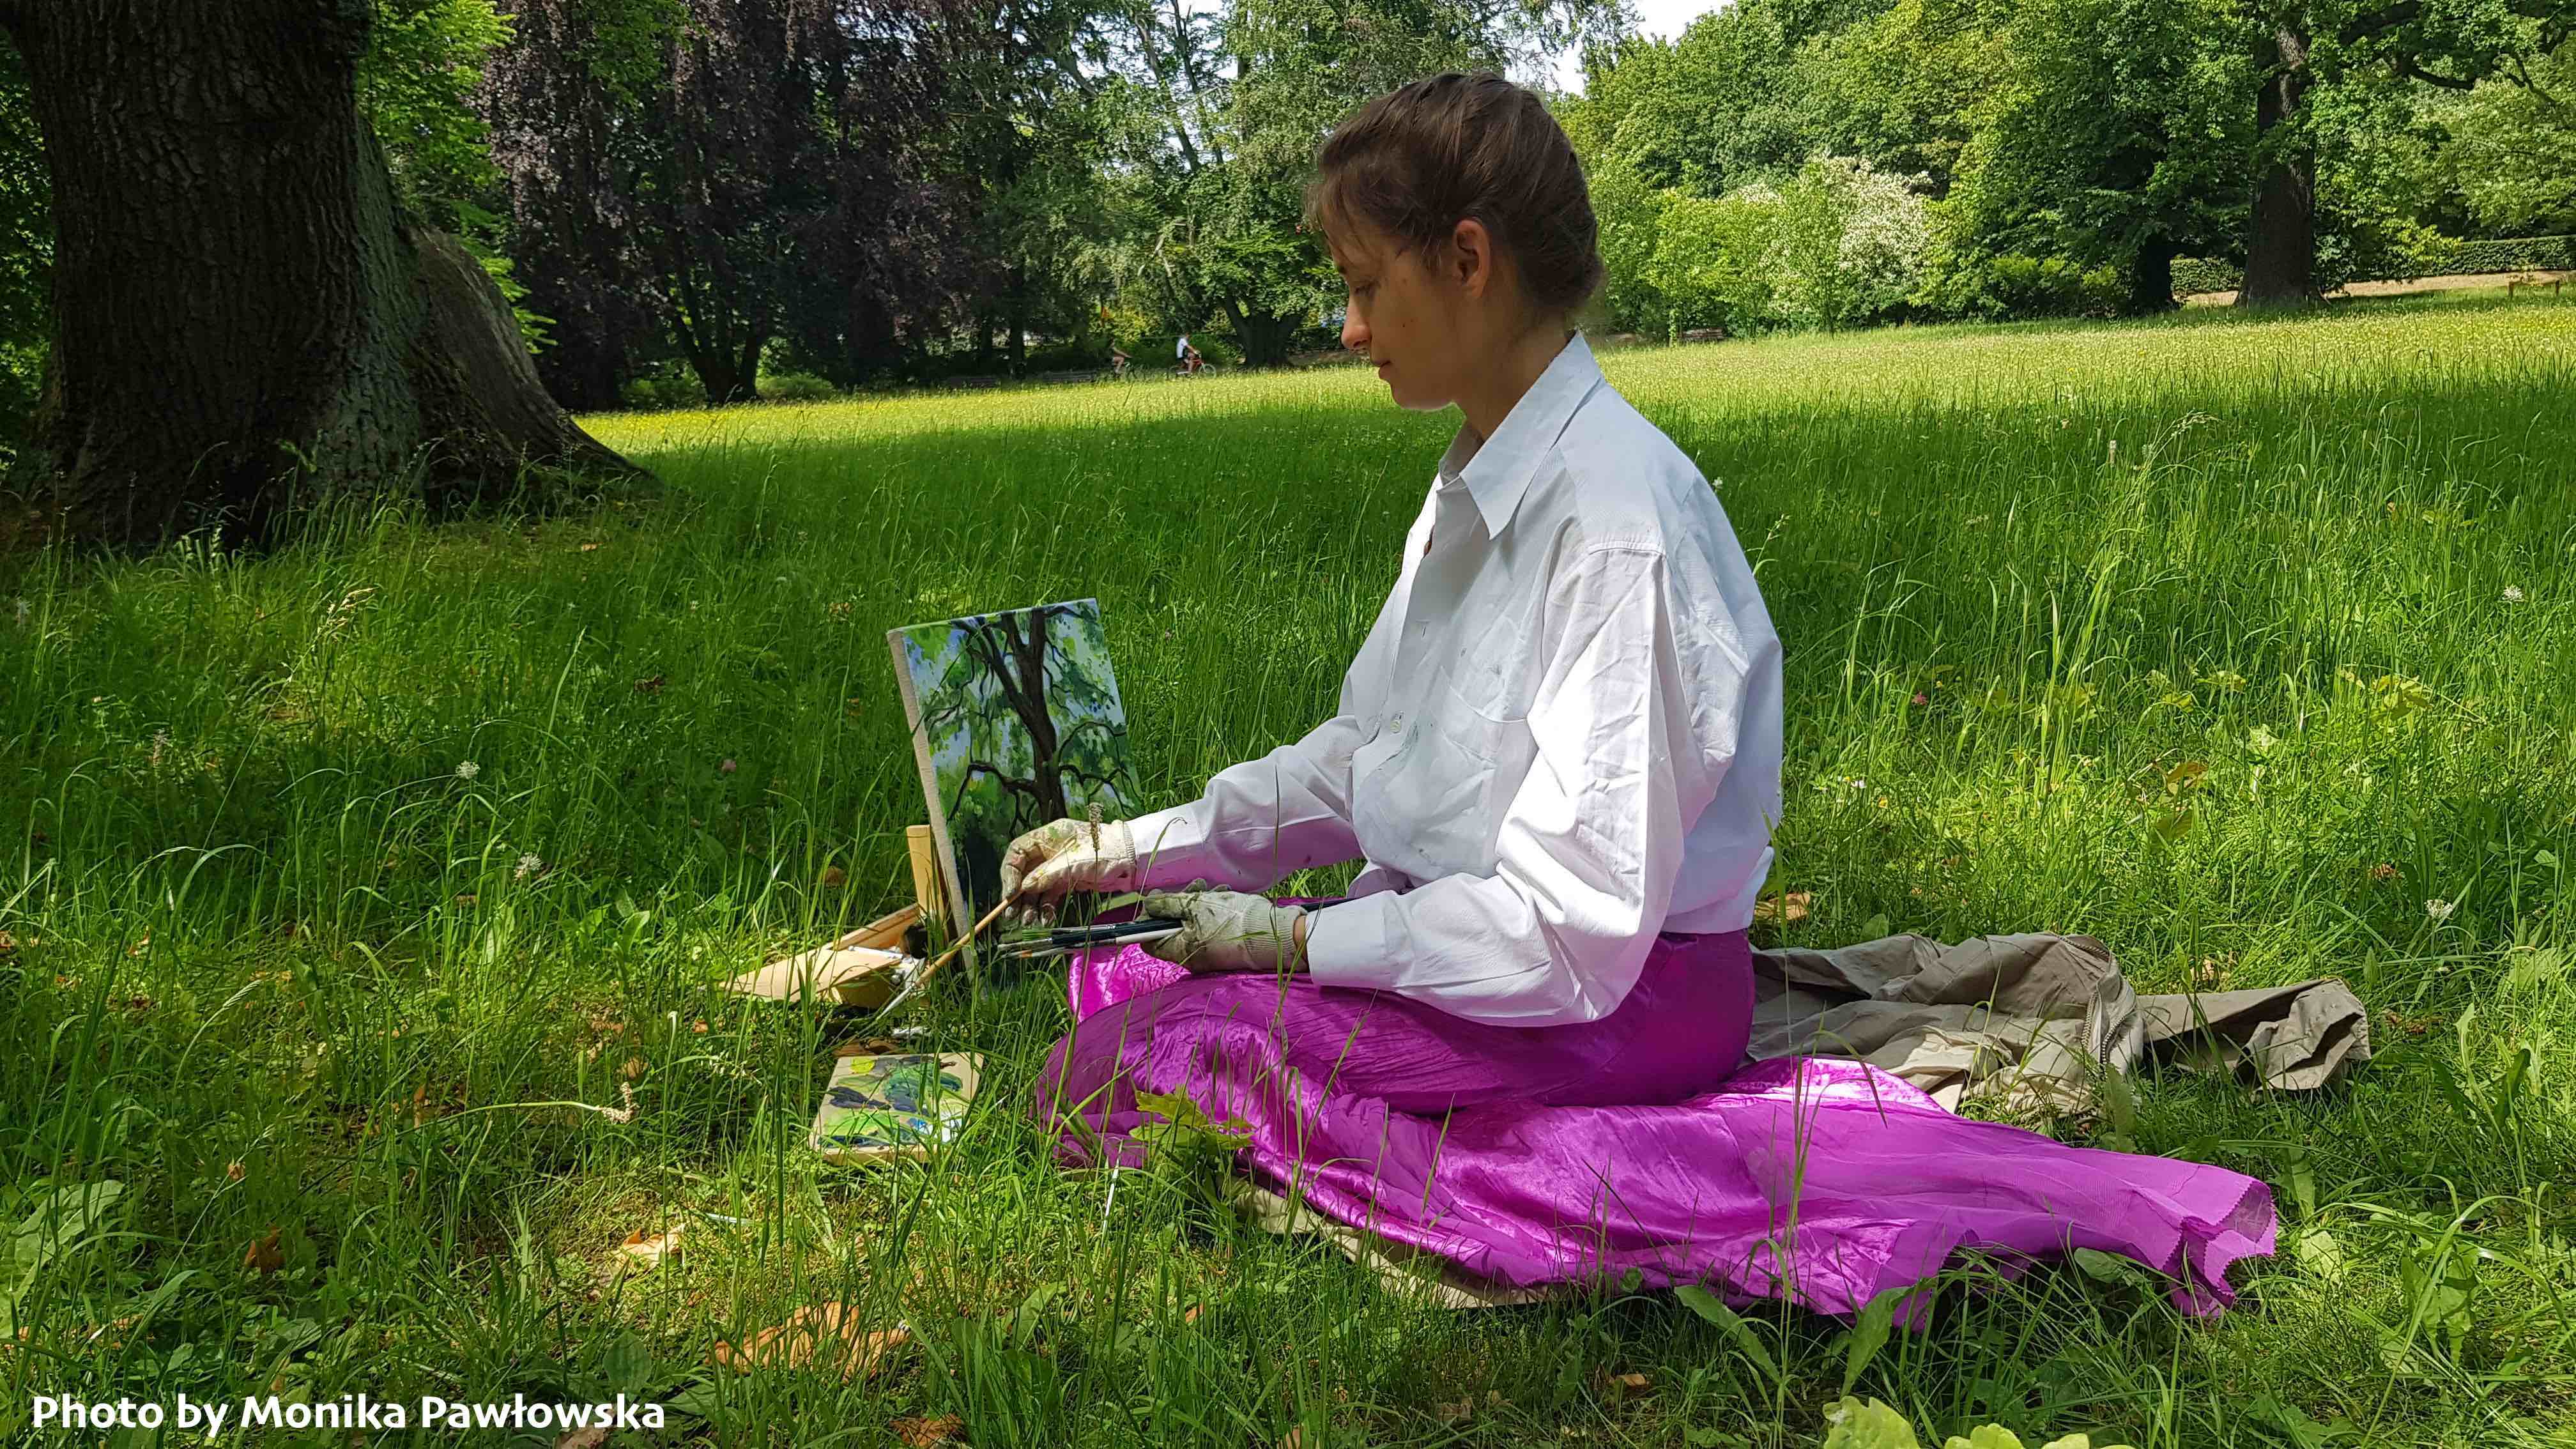 Anna Maria Fusaro paints in the Szczytnicki Park